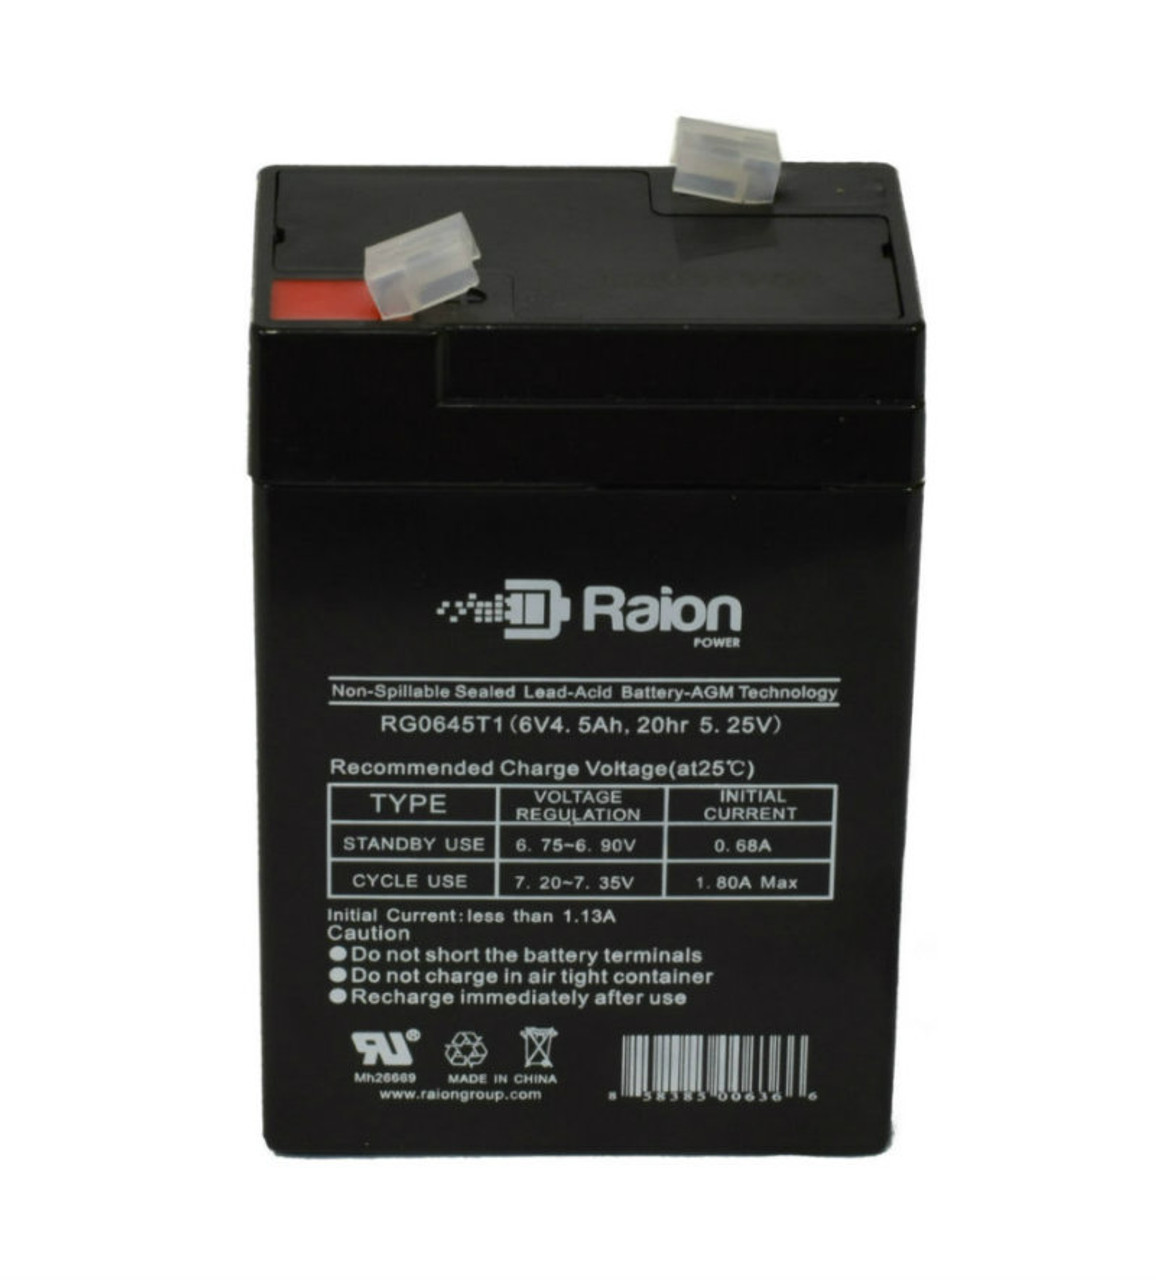 Raion Power RG0645T1 Replacement Battery Cartridge for Sonnenschein A506/42K